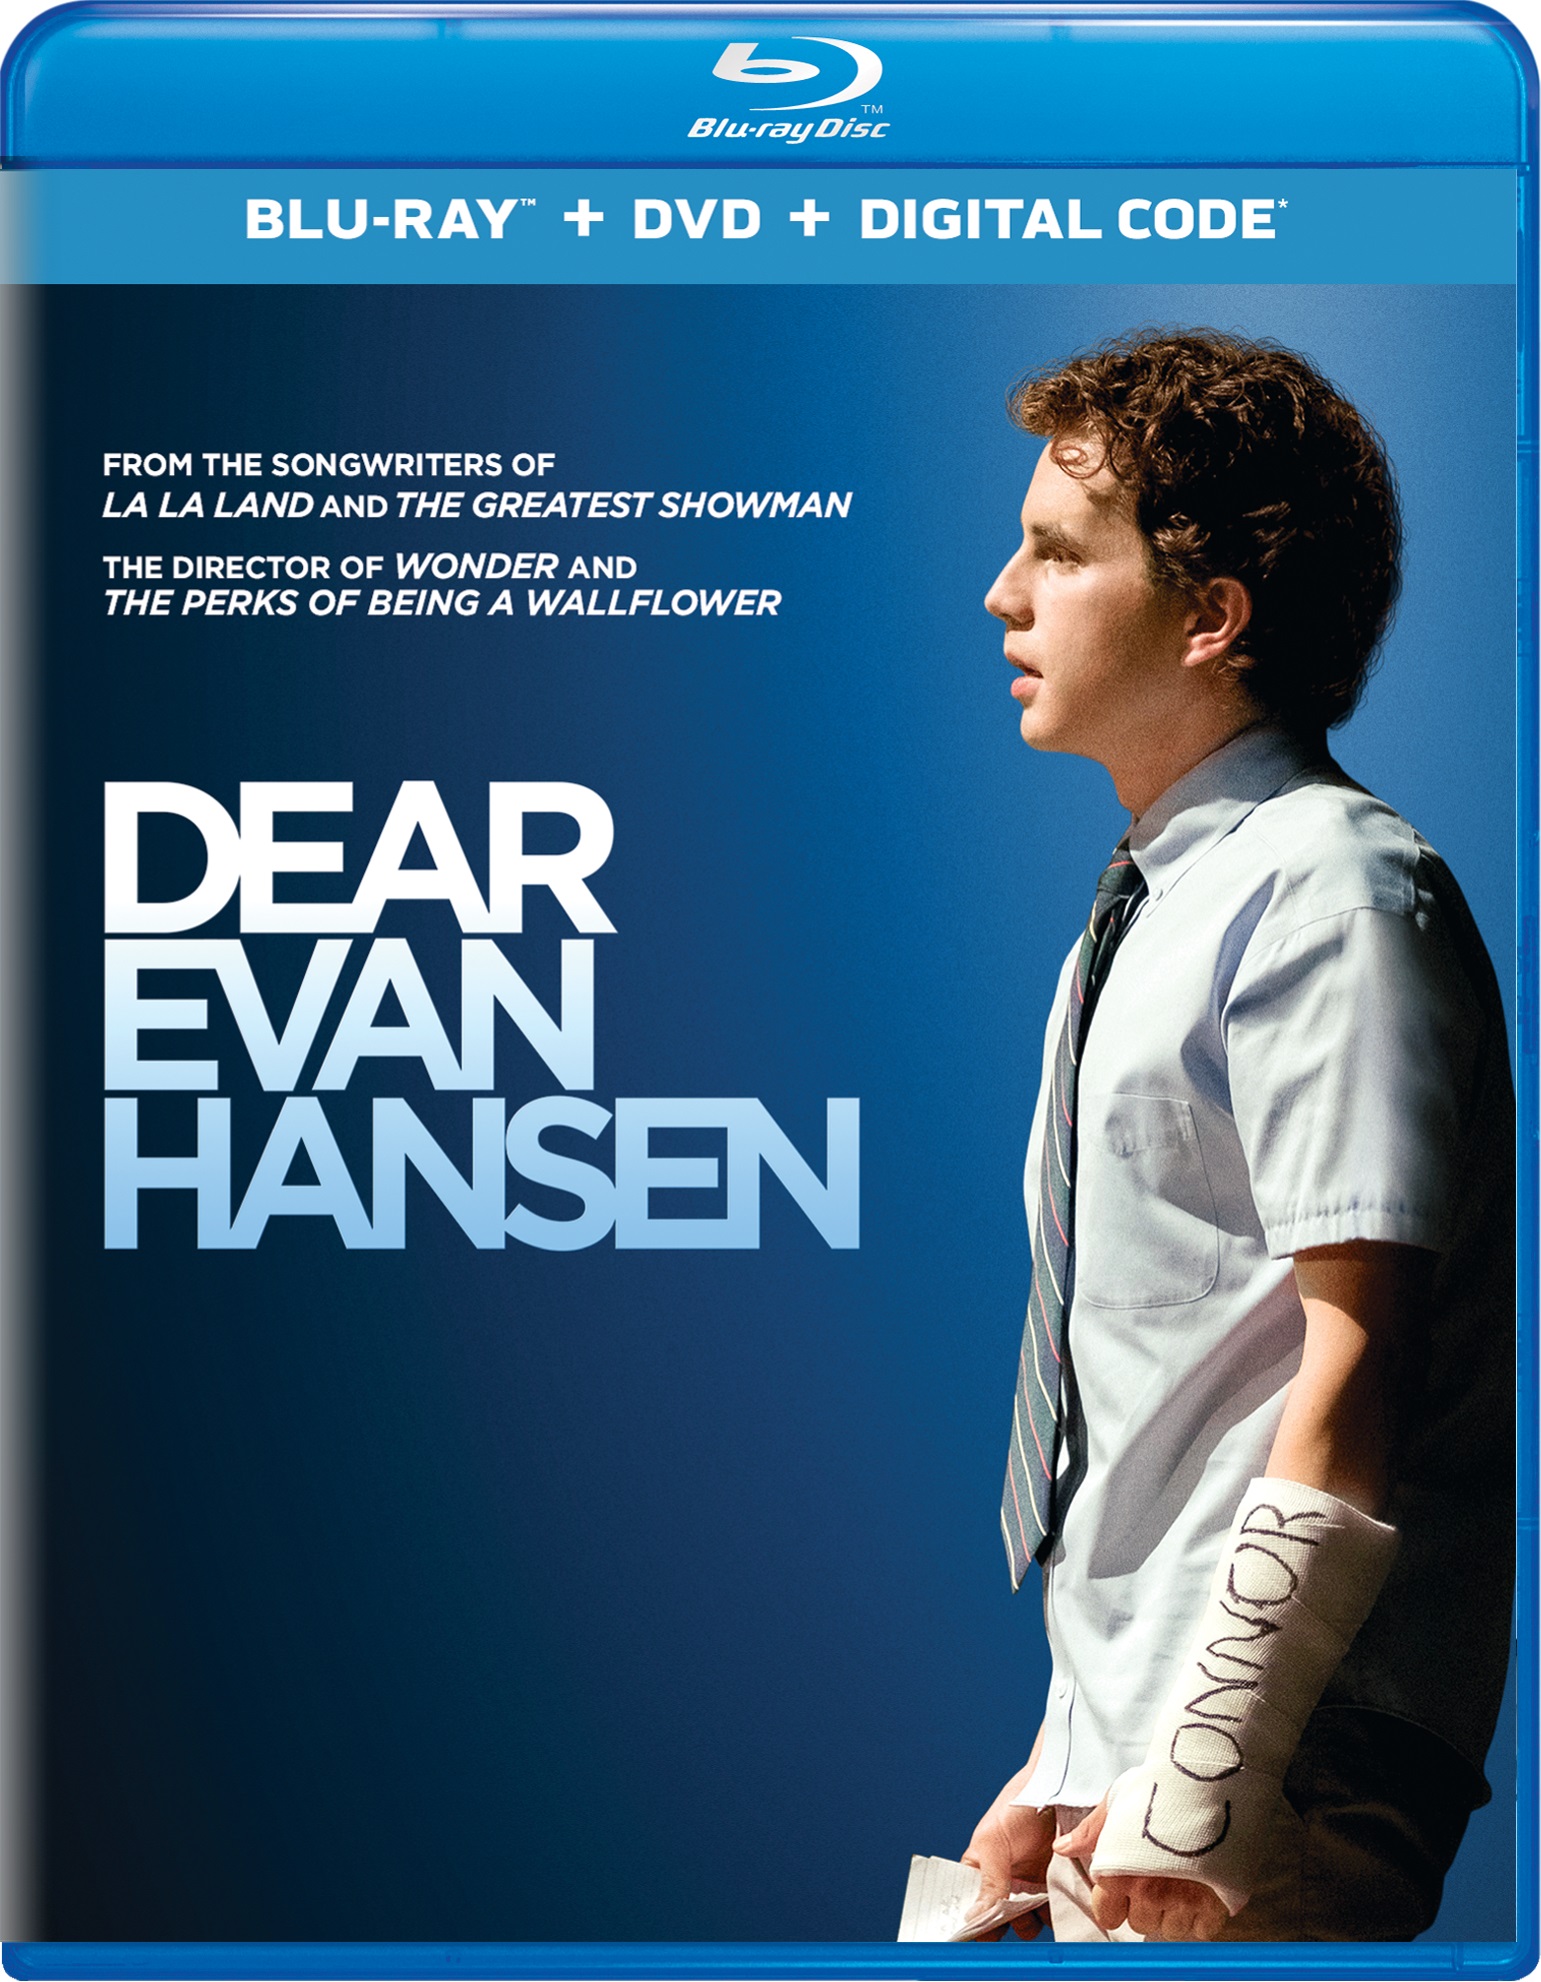 Dear Evan Hansen (with DVD) - Blu-ray [ 2021 ]  - Musical Movies On Blu-ray - Movies On GRUV